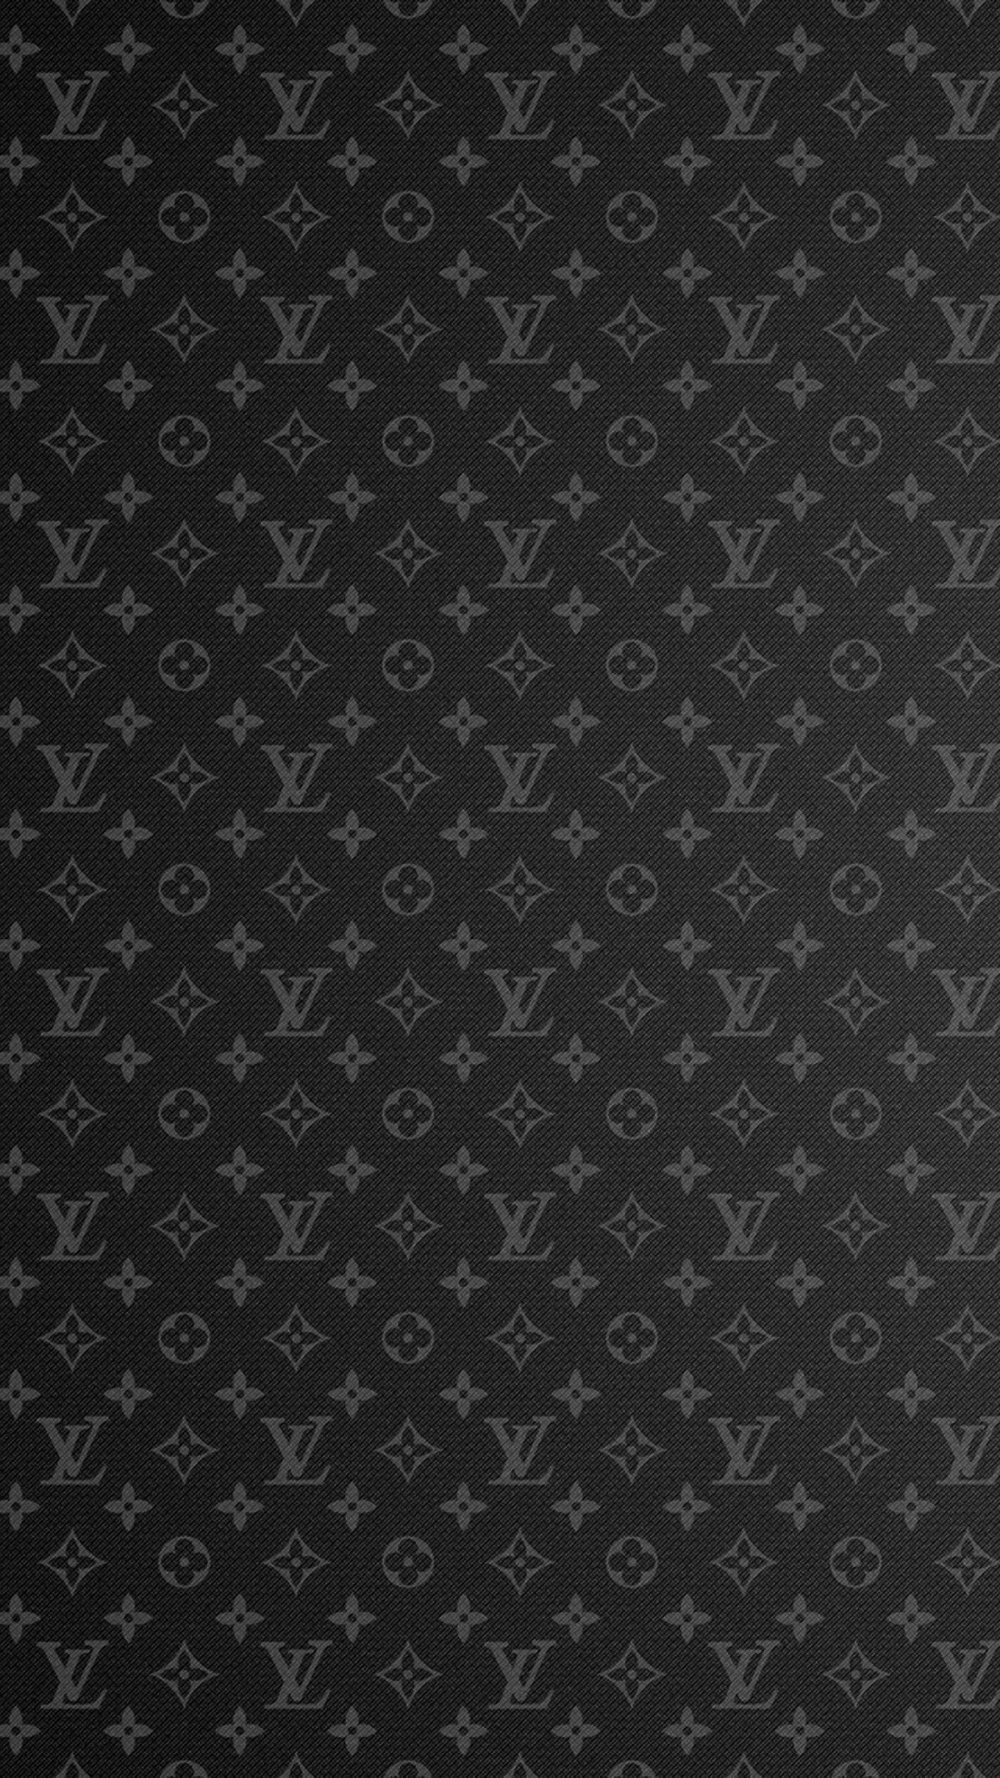 Supreme Louis Vuitton обои